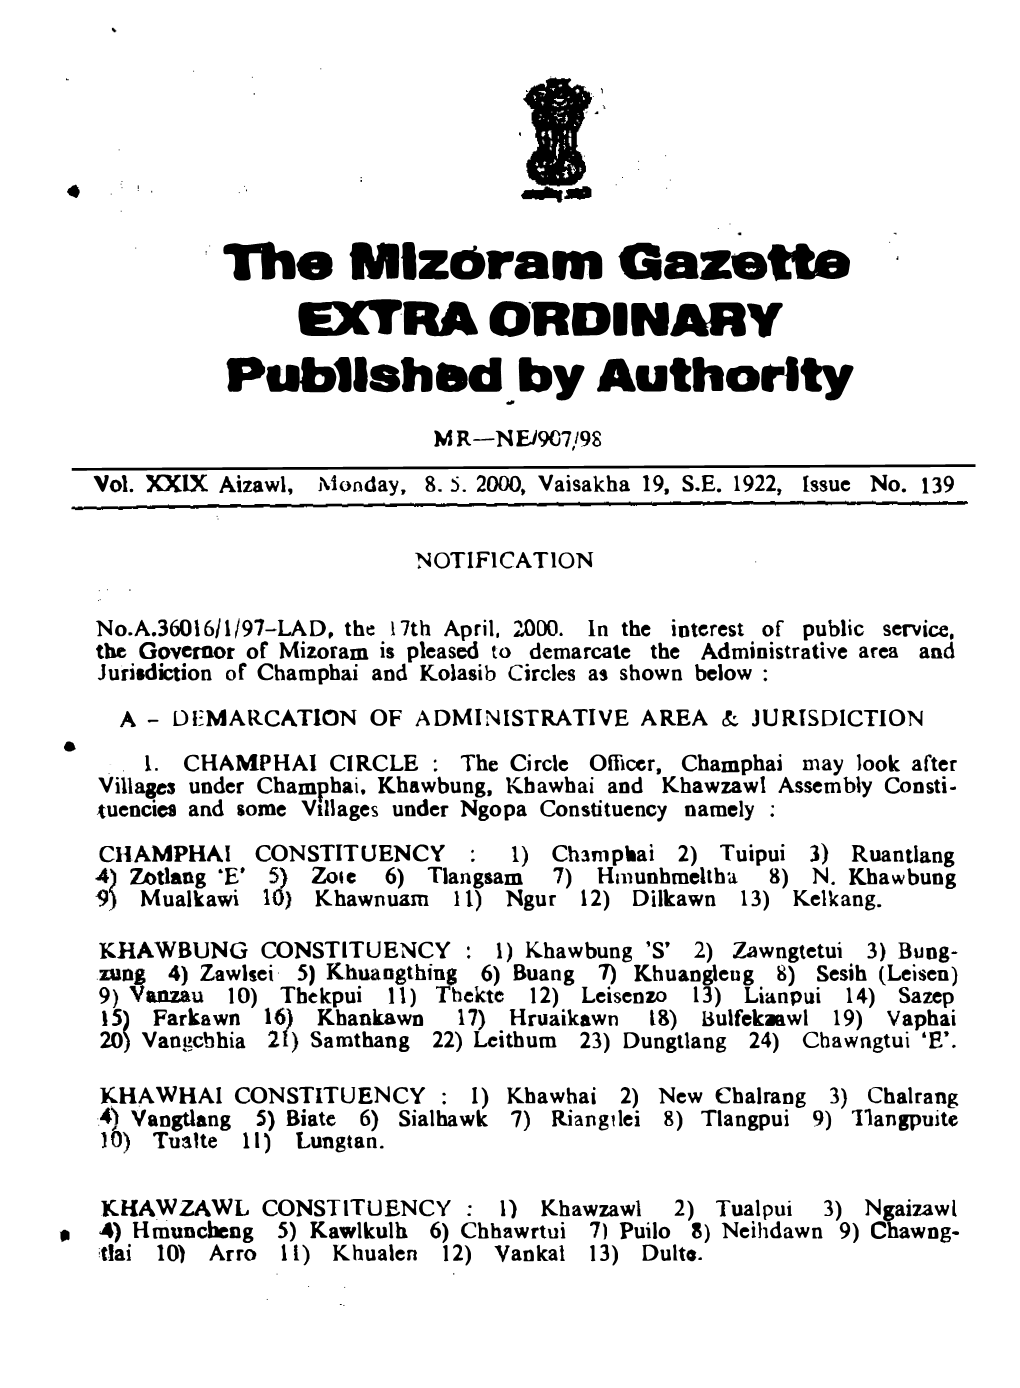 The Mlzoram Gazette EXTRA ORDINARY Pub1lshed. by Authority